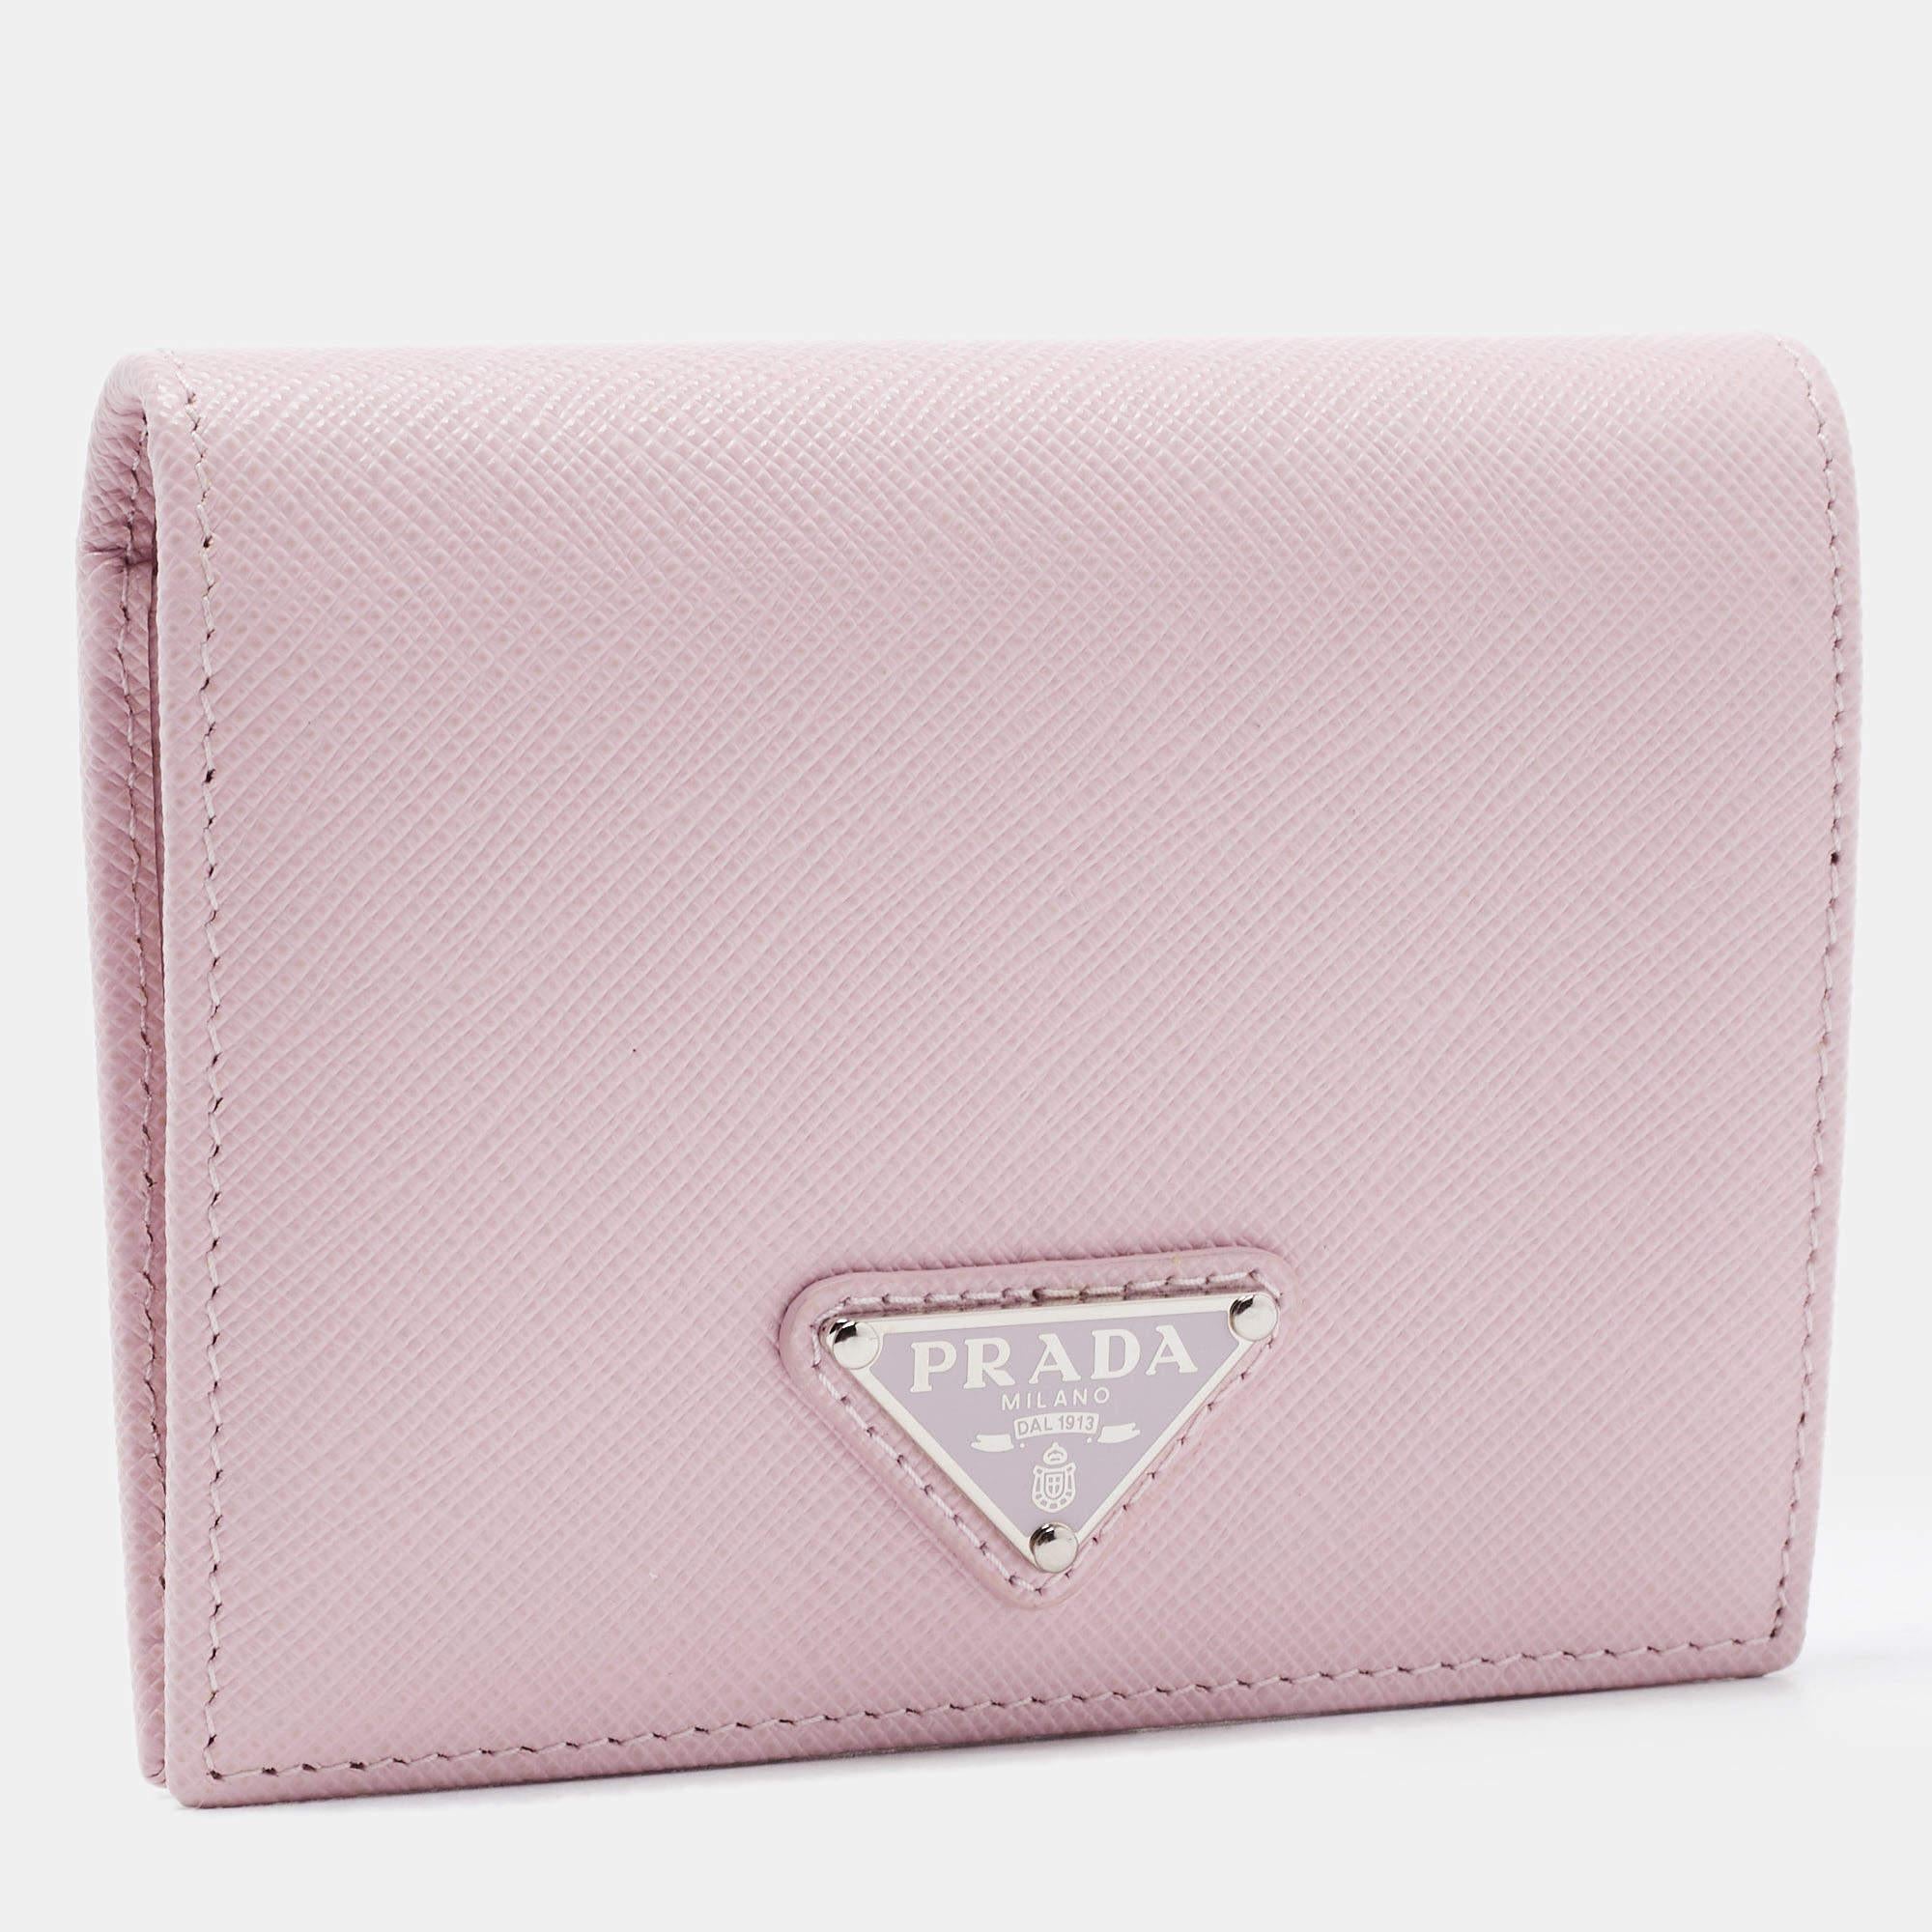 light pink prada wallet